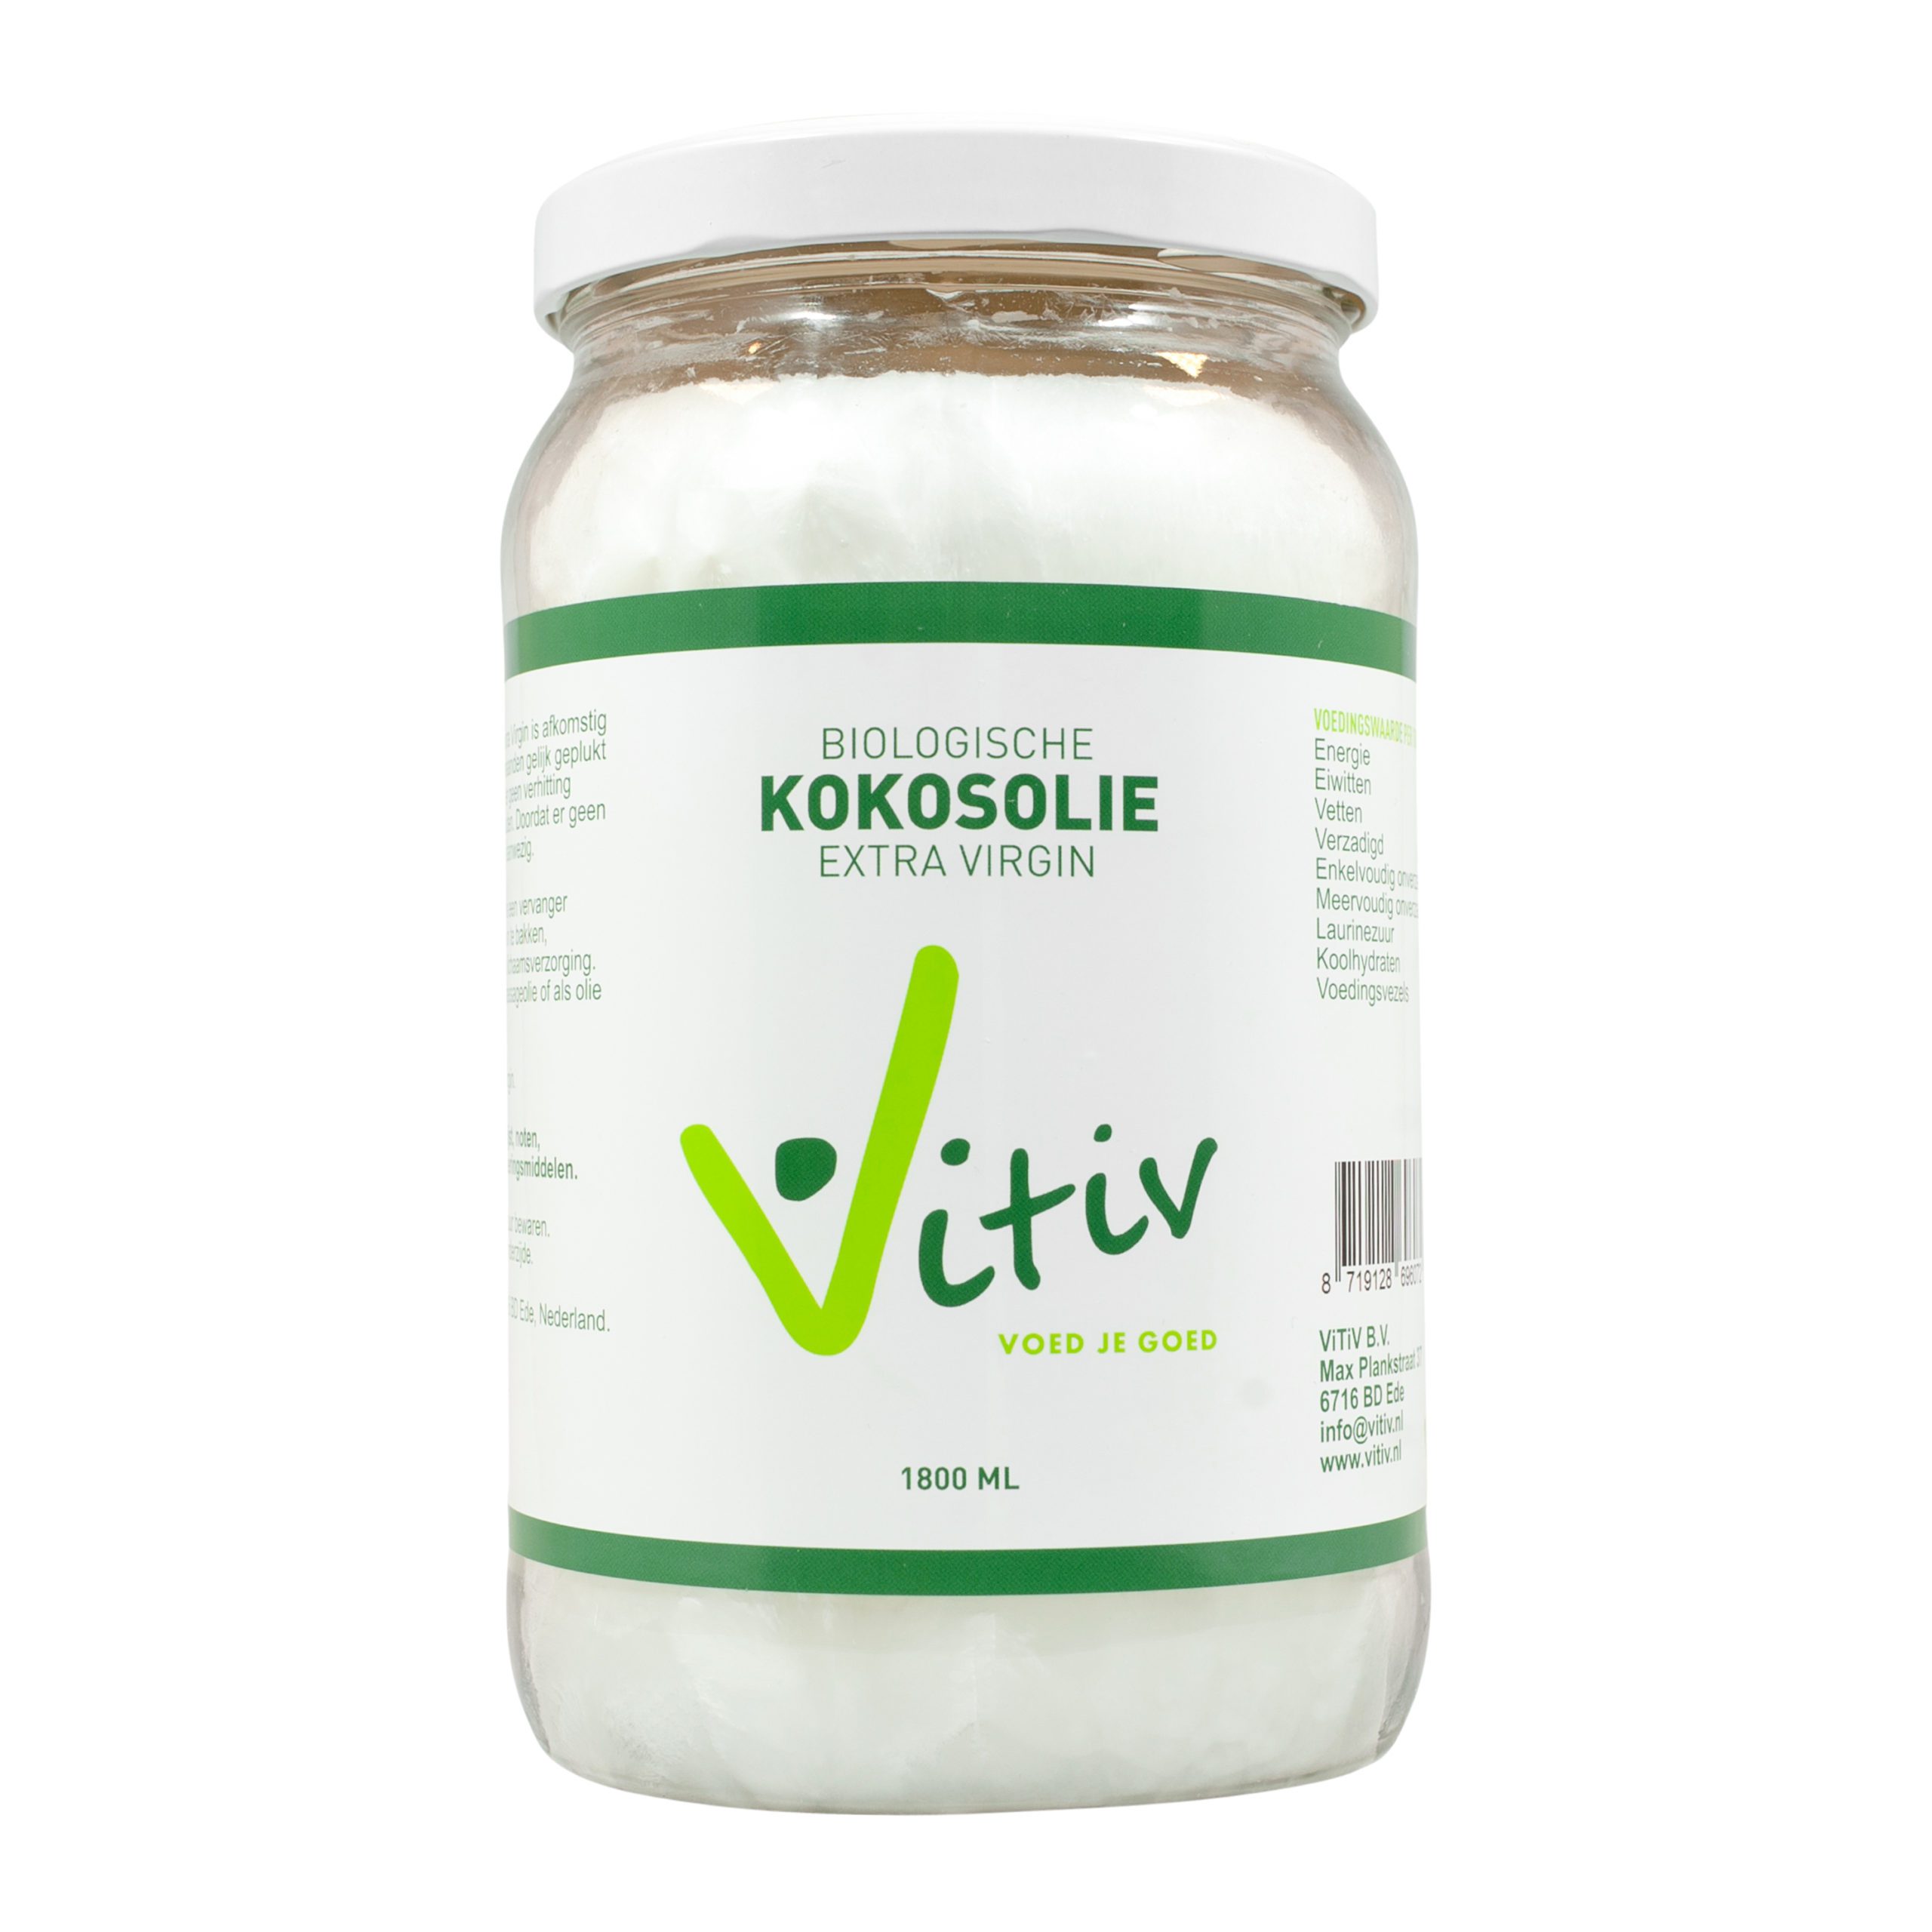 Kokosolie virgin - Vitiv.nl